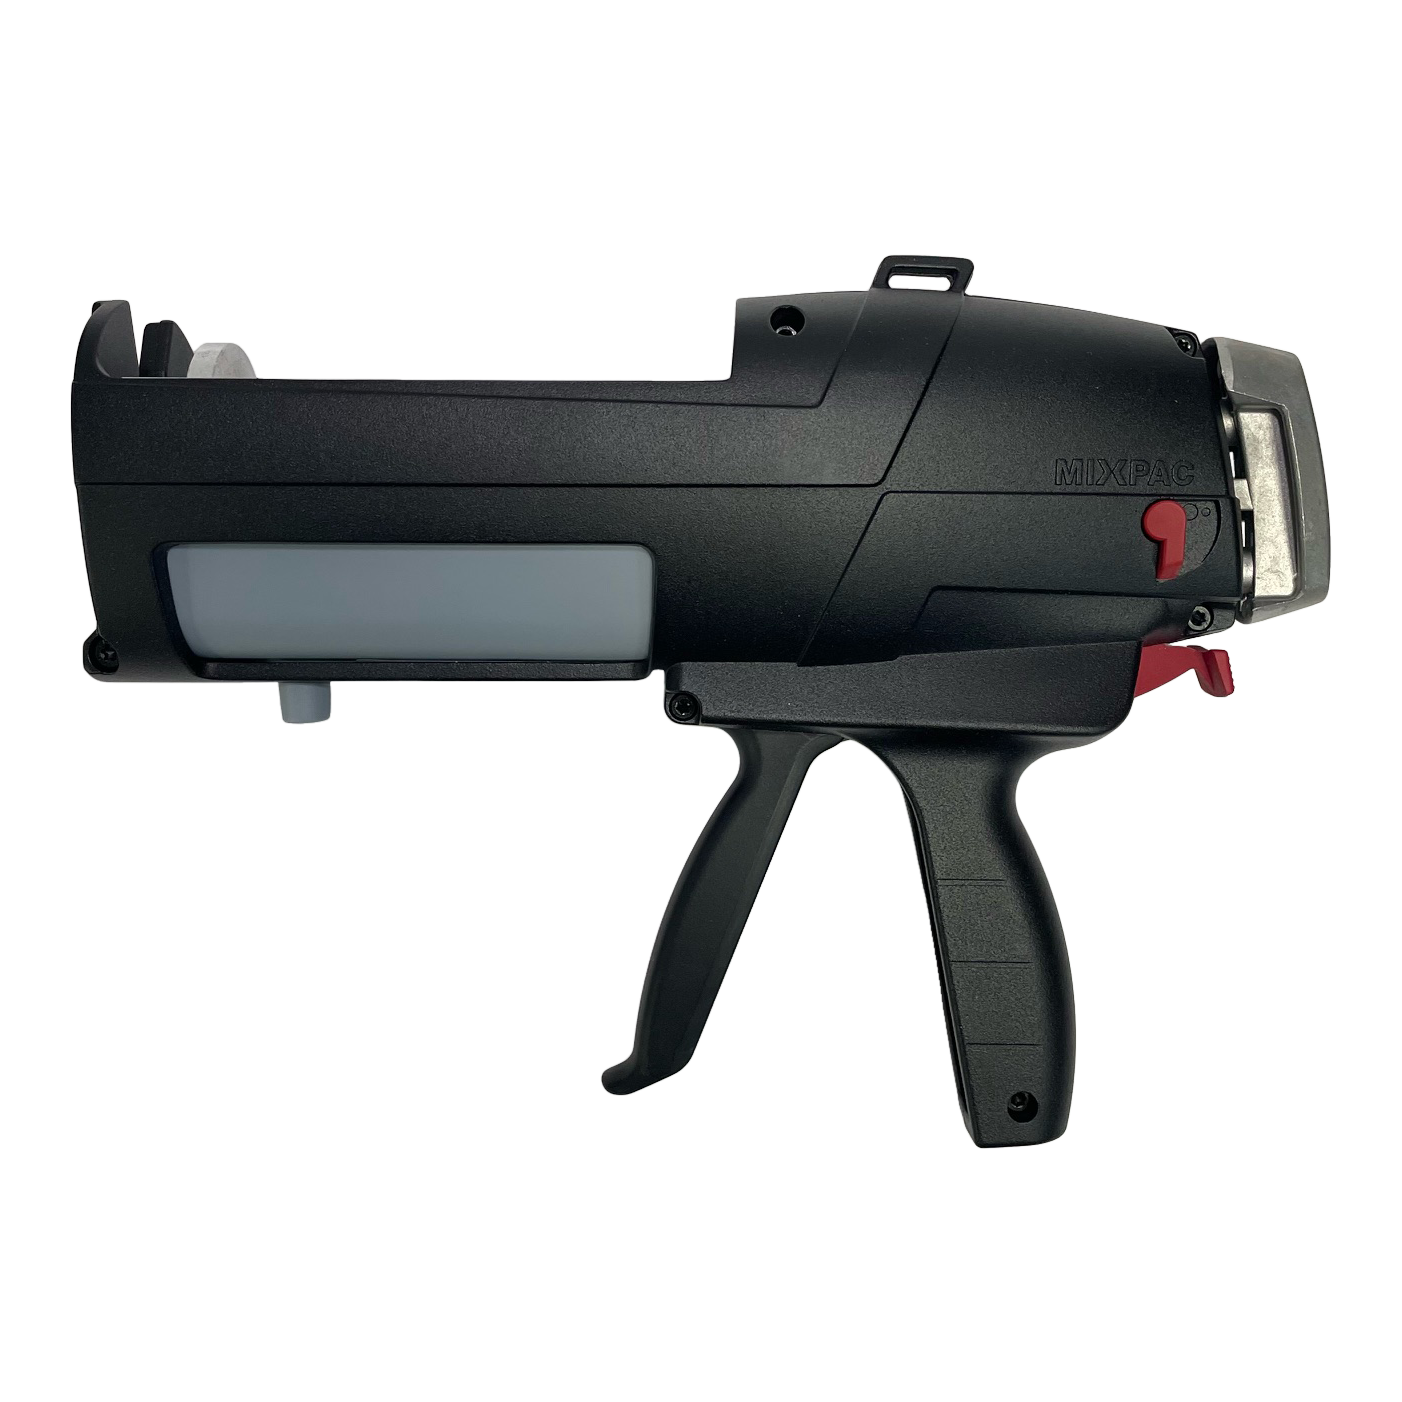 Sulzer Medmix DM2X 400 - 400ml Manual Cartridge Gun